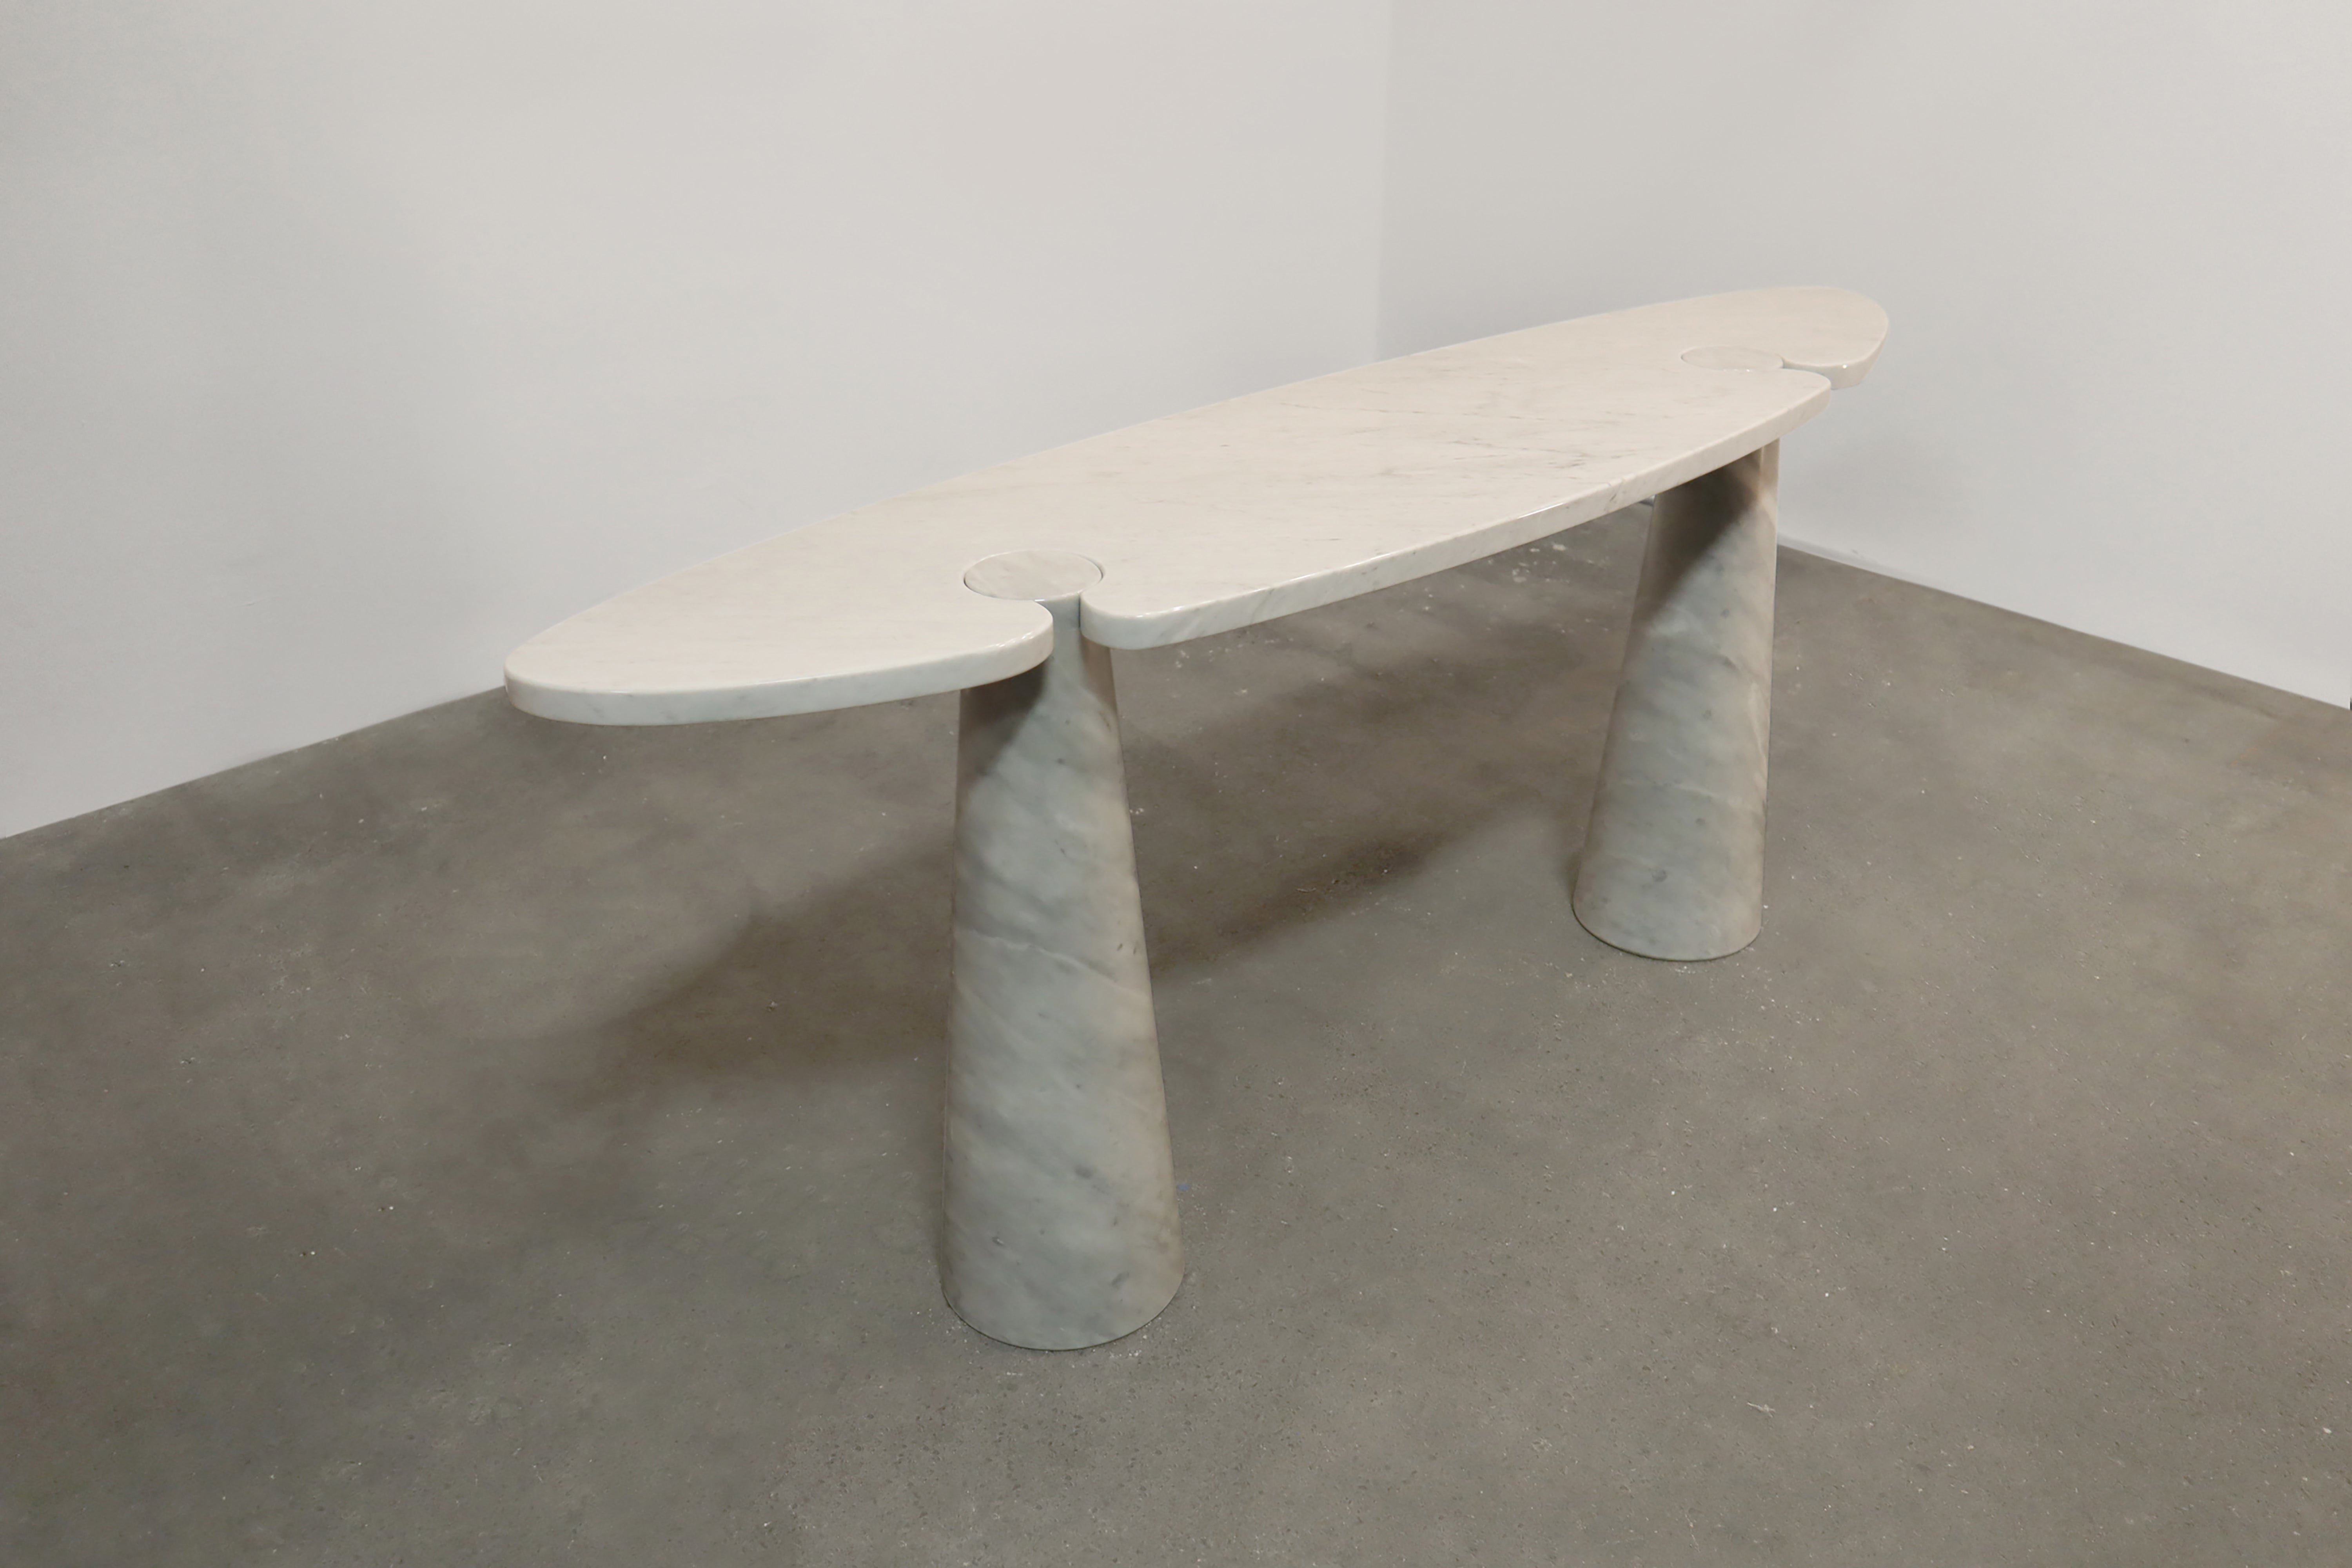 Mangiarotti Eros Console Table in Carrara Marble for Skipper, Italy